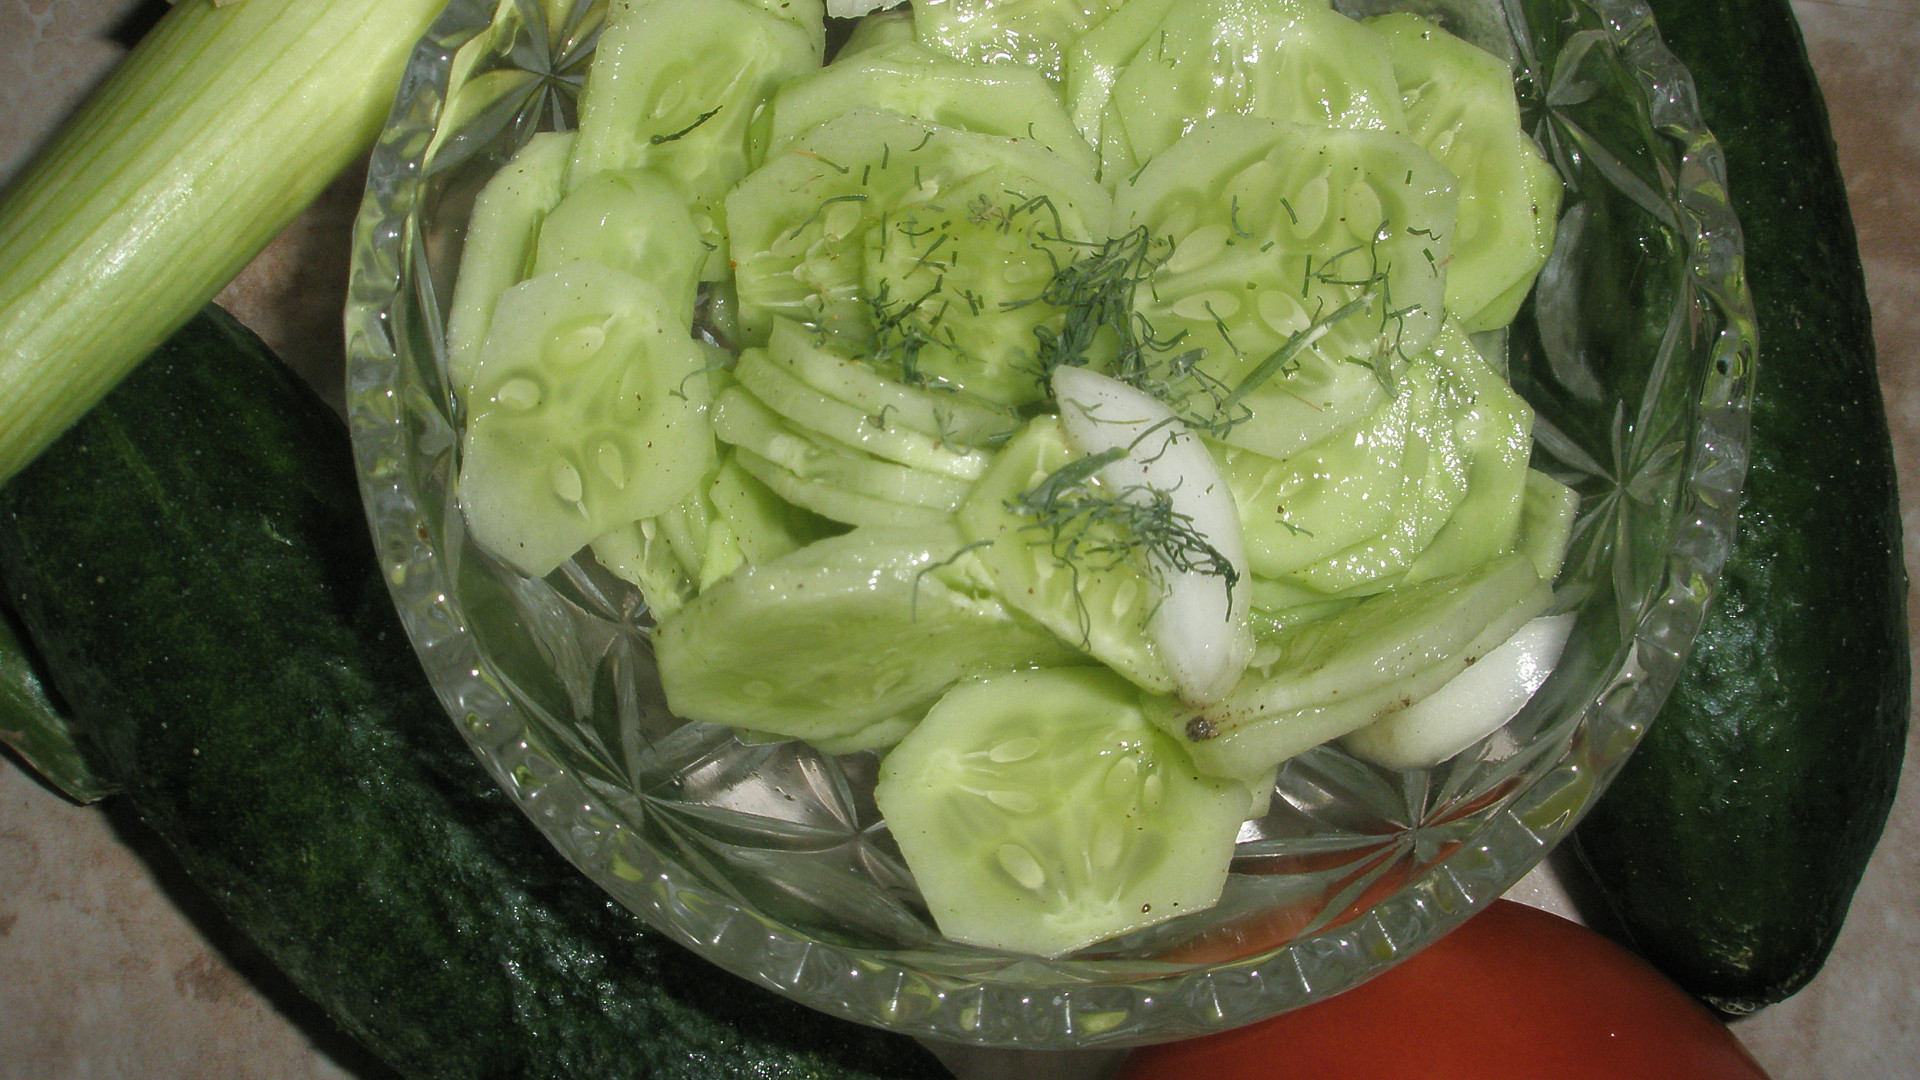 Okurkový salát s koprem